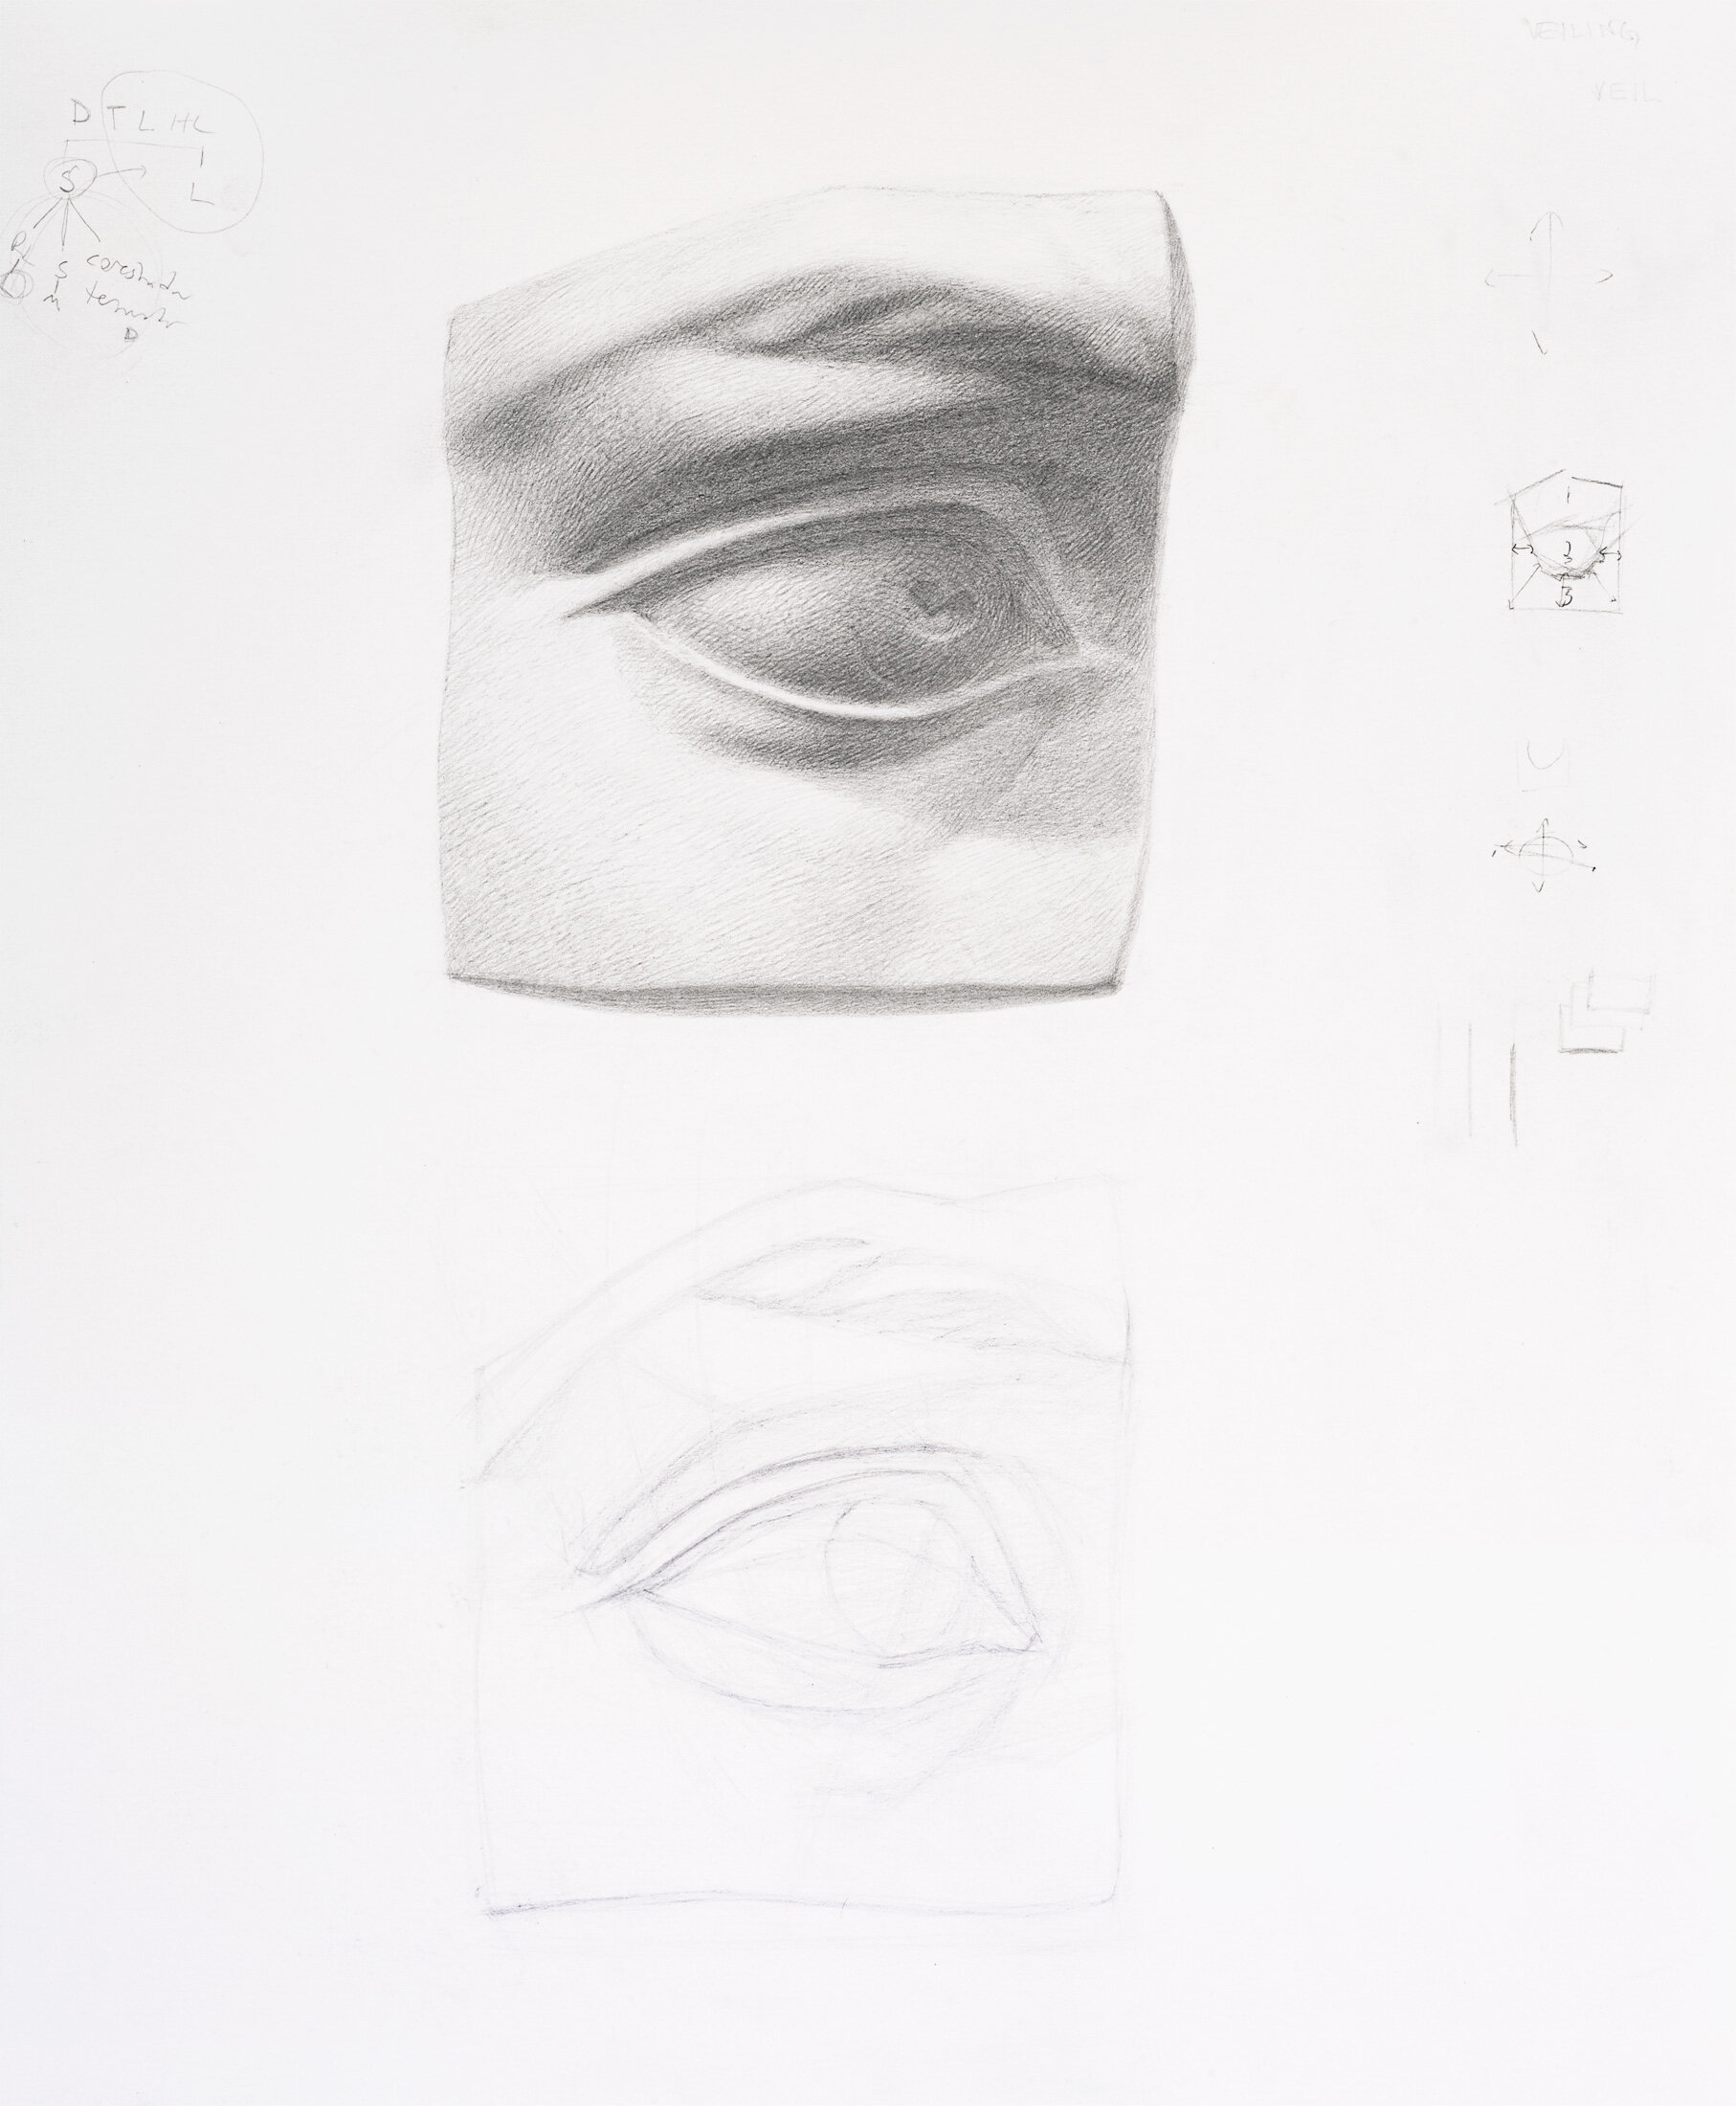 Plaster Cast Eye Study, 2013 - graphite pencil on paper 